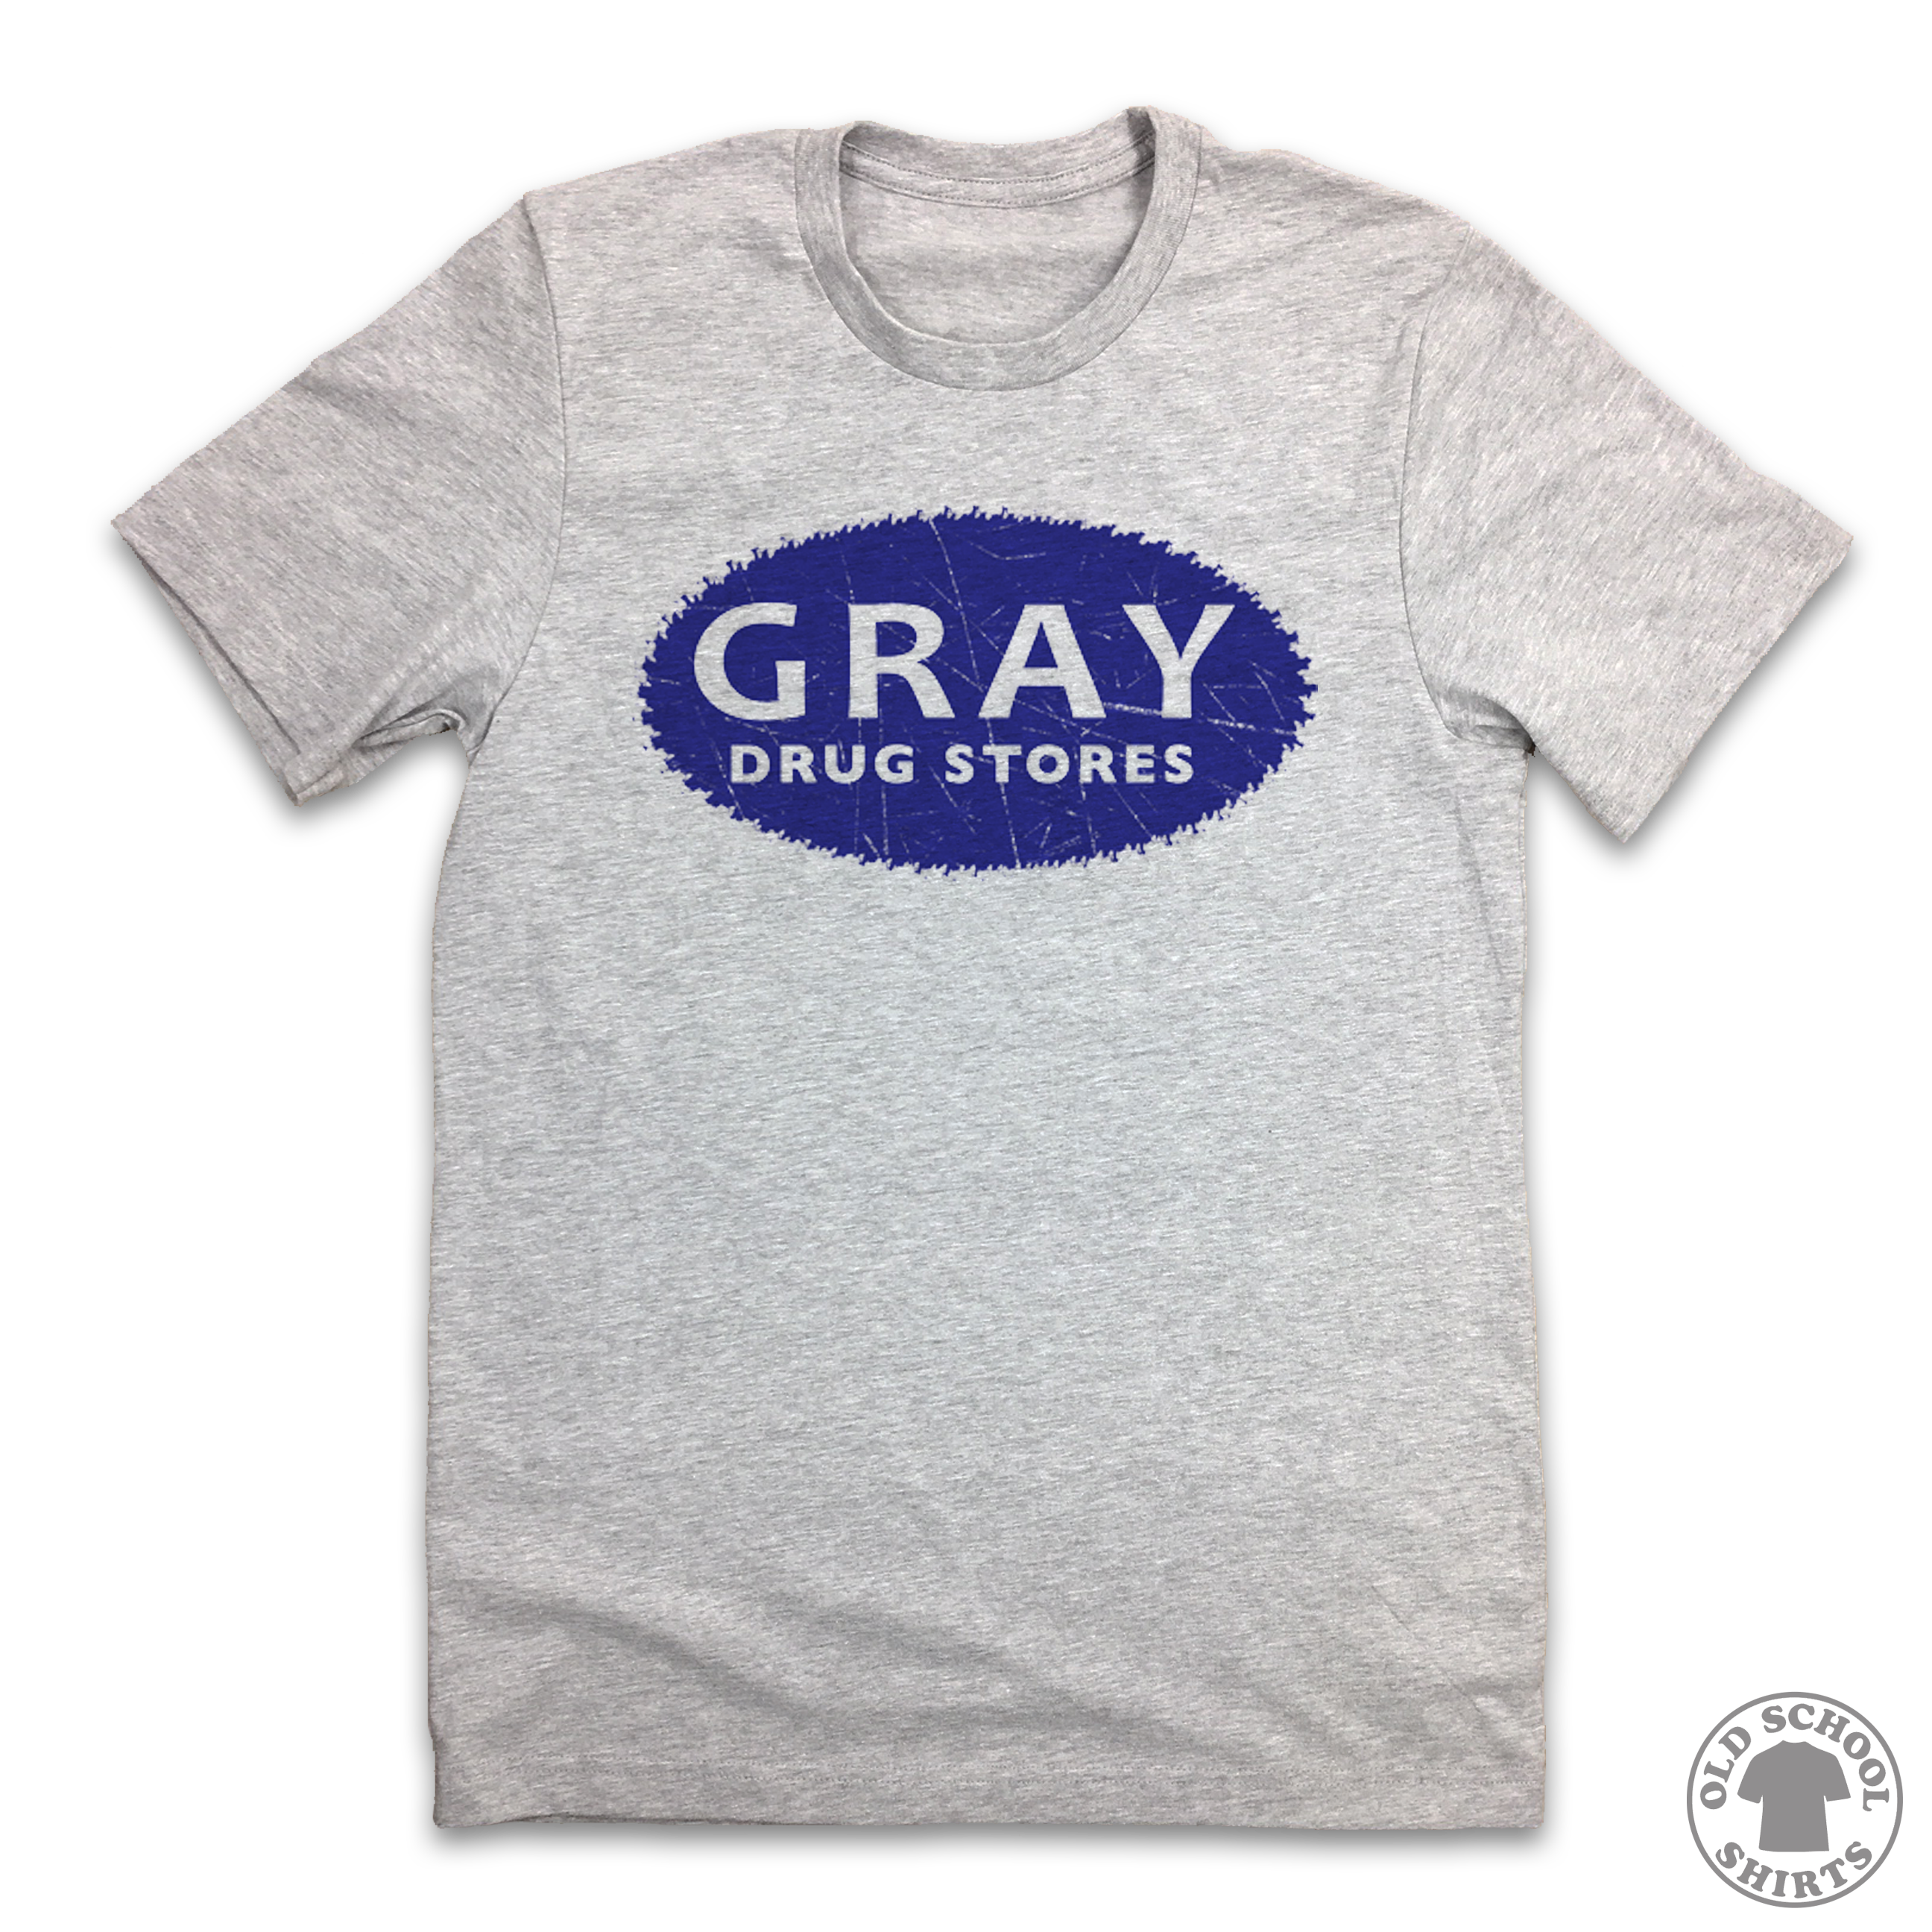 Gray Drug Stores - Old School Shirts- Retro Sports T Shirts